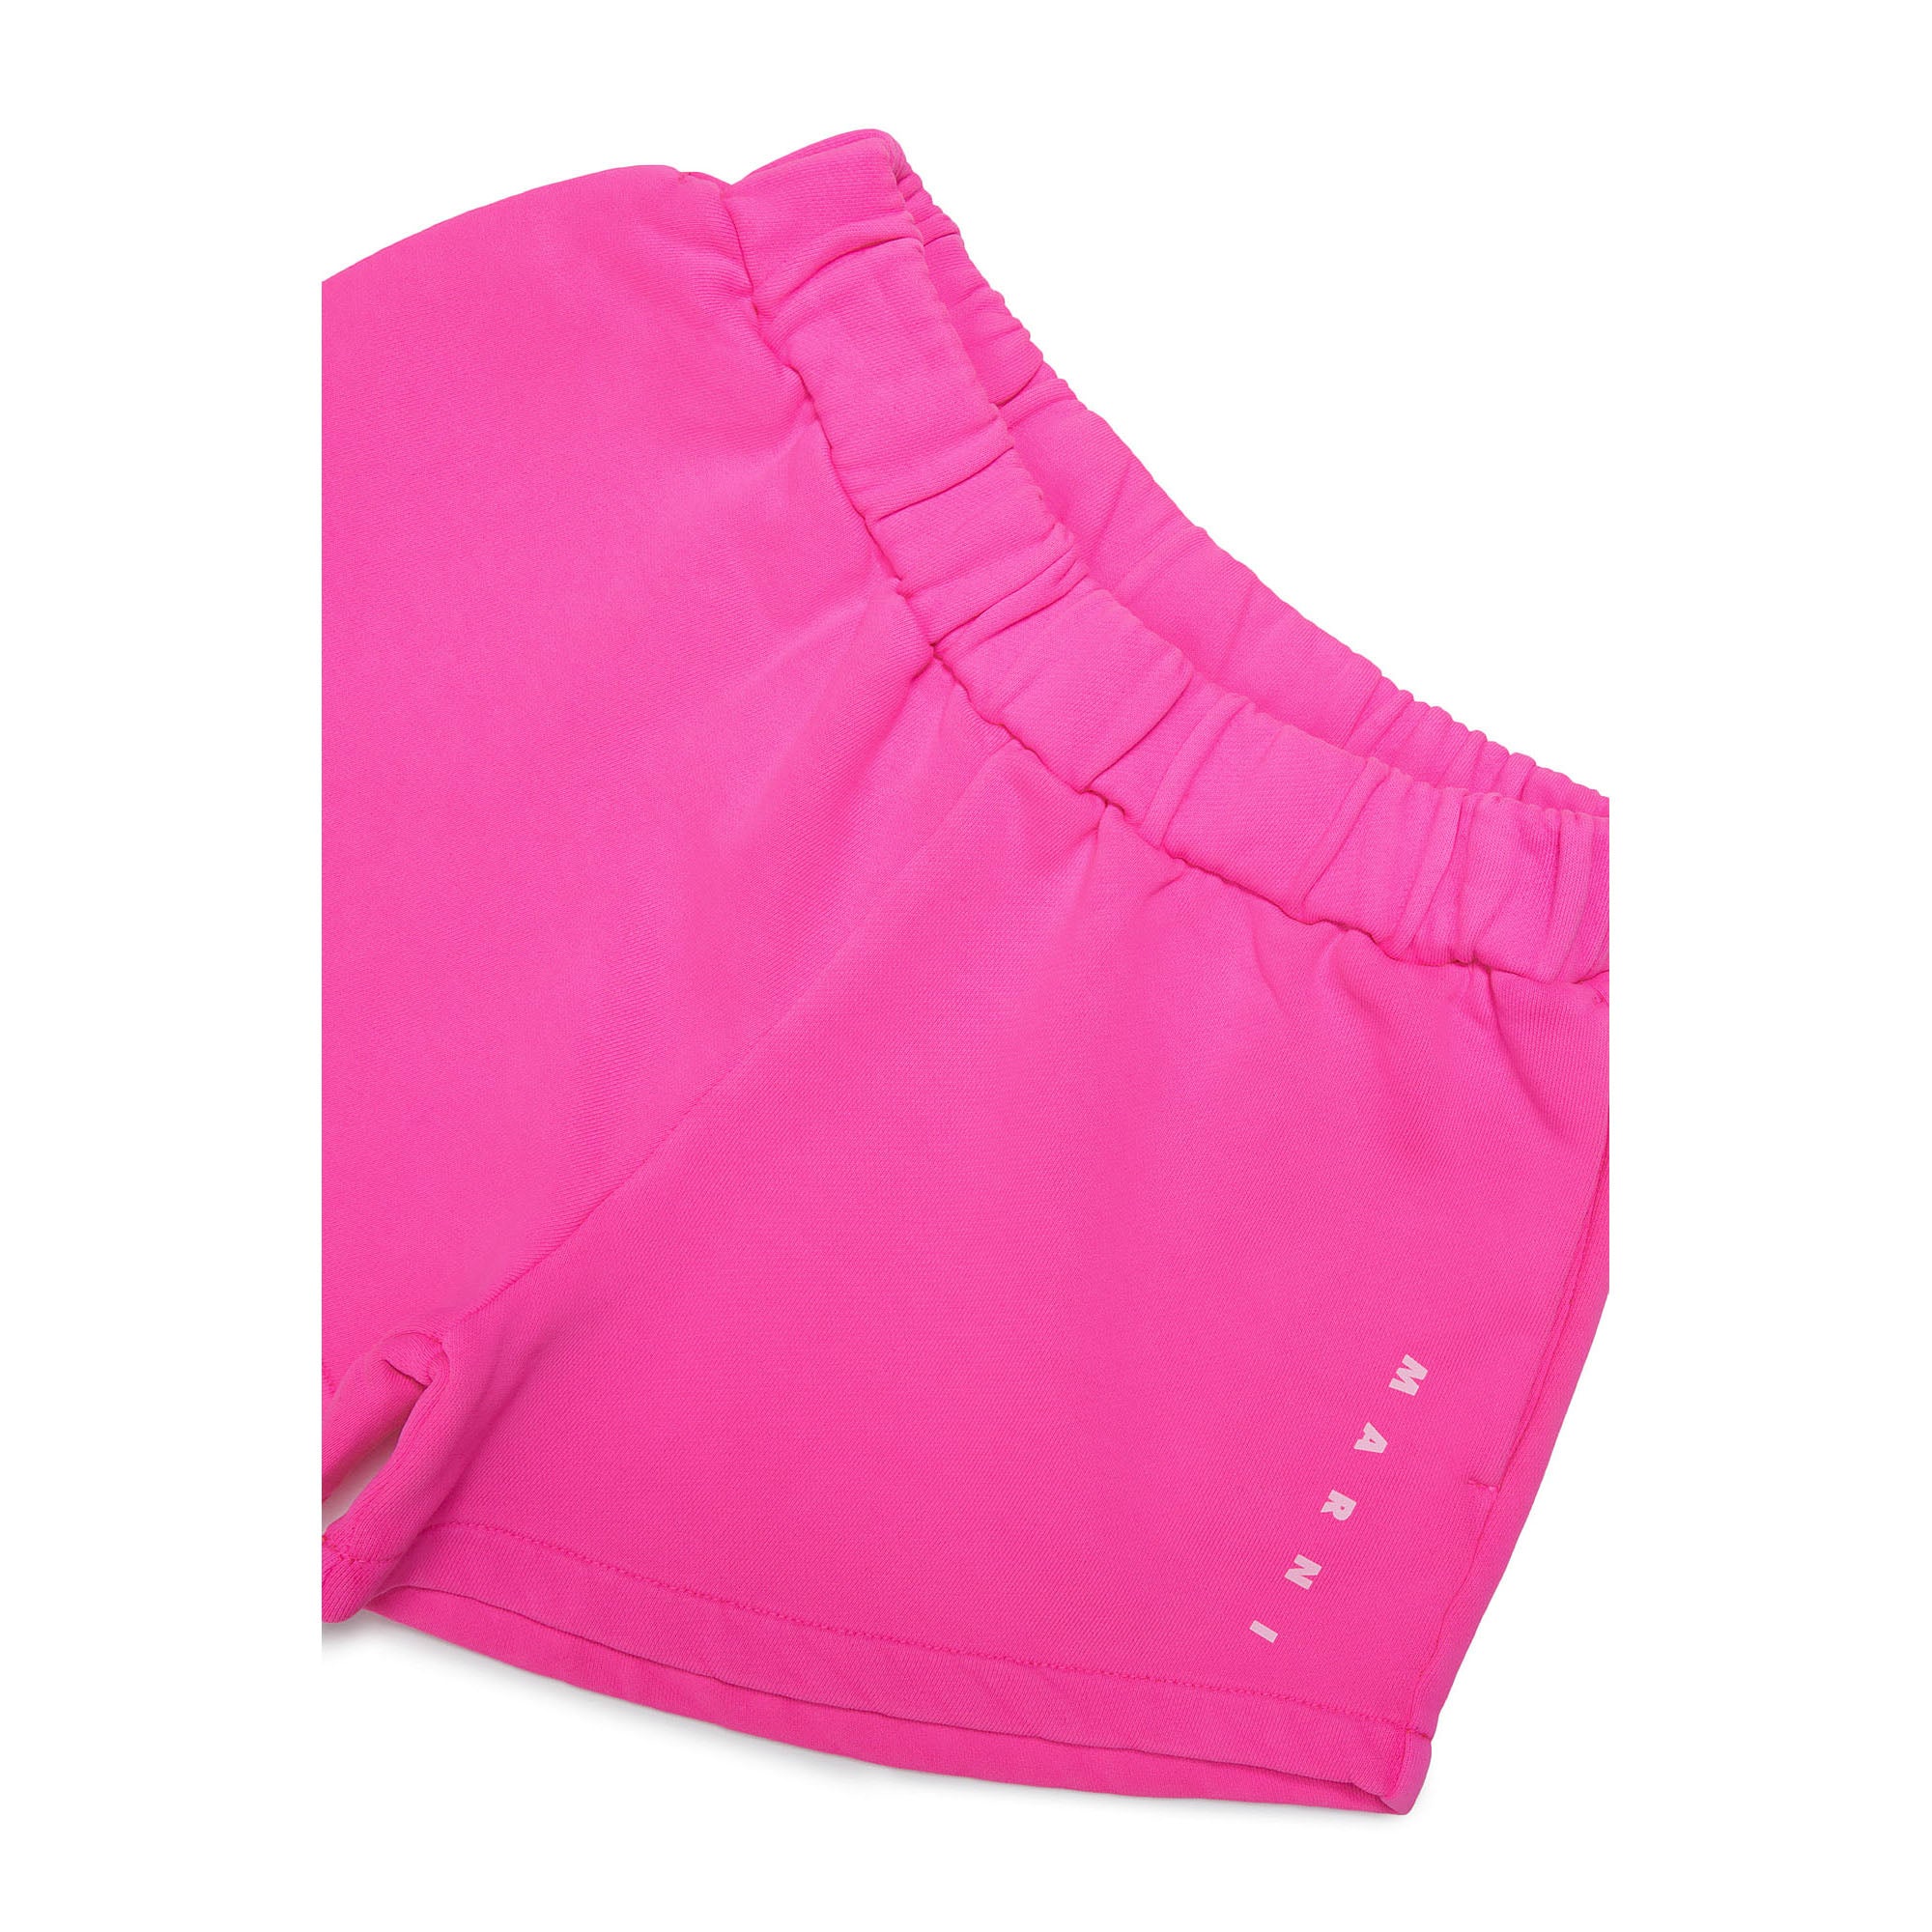 Girls Bright Pink Logo Cotton Shorts